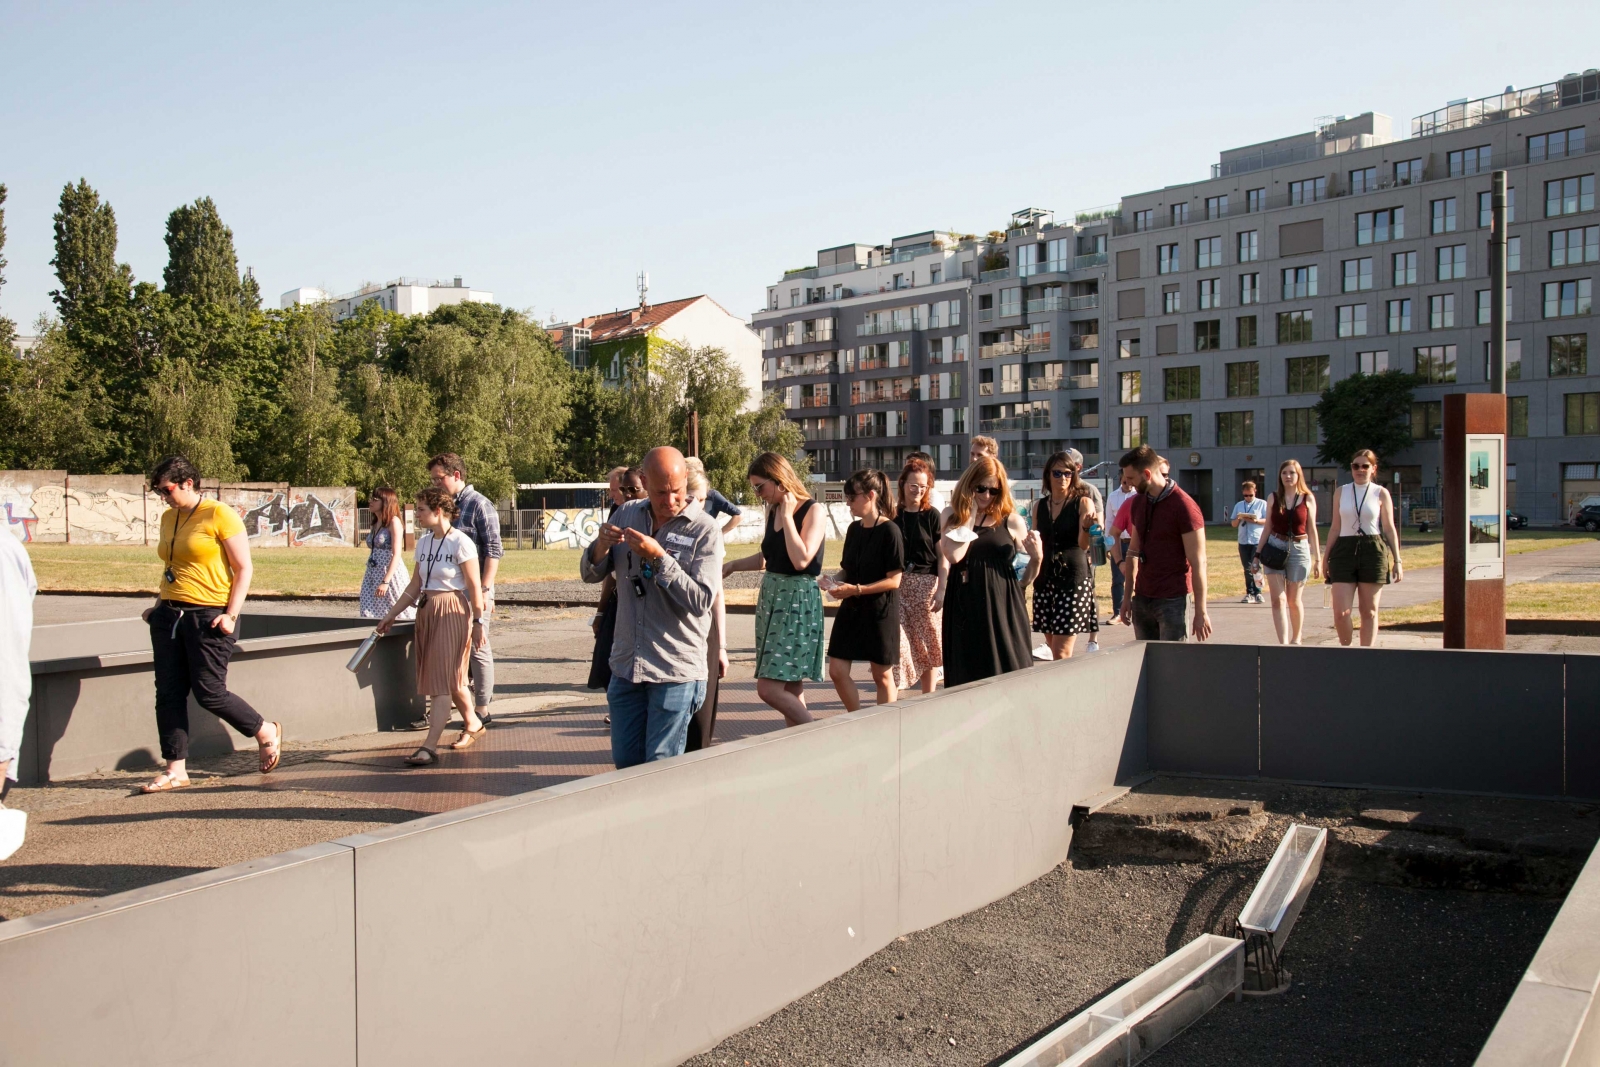 Visitors at the Berlin Wall Memorial